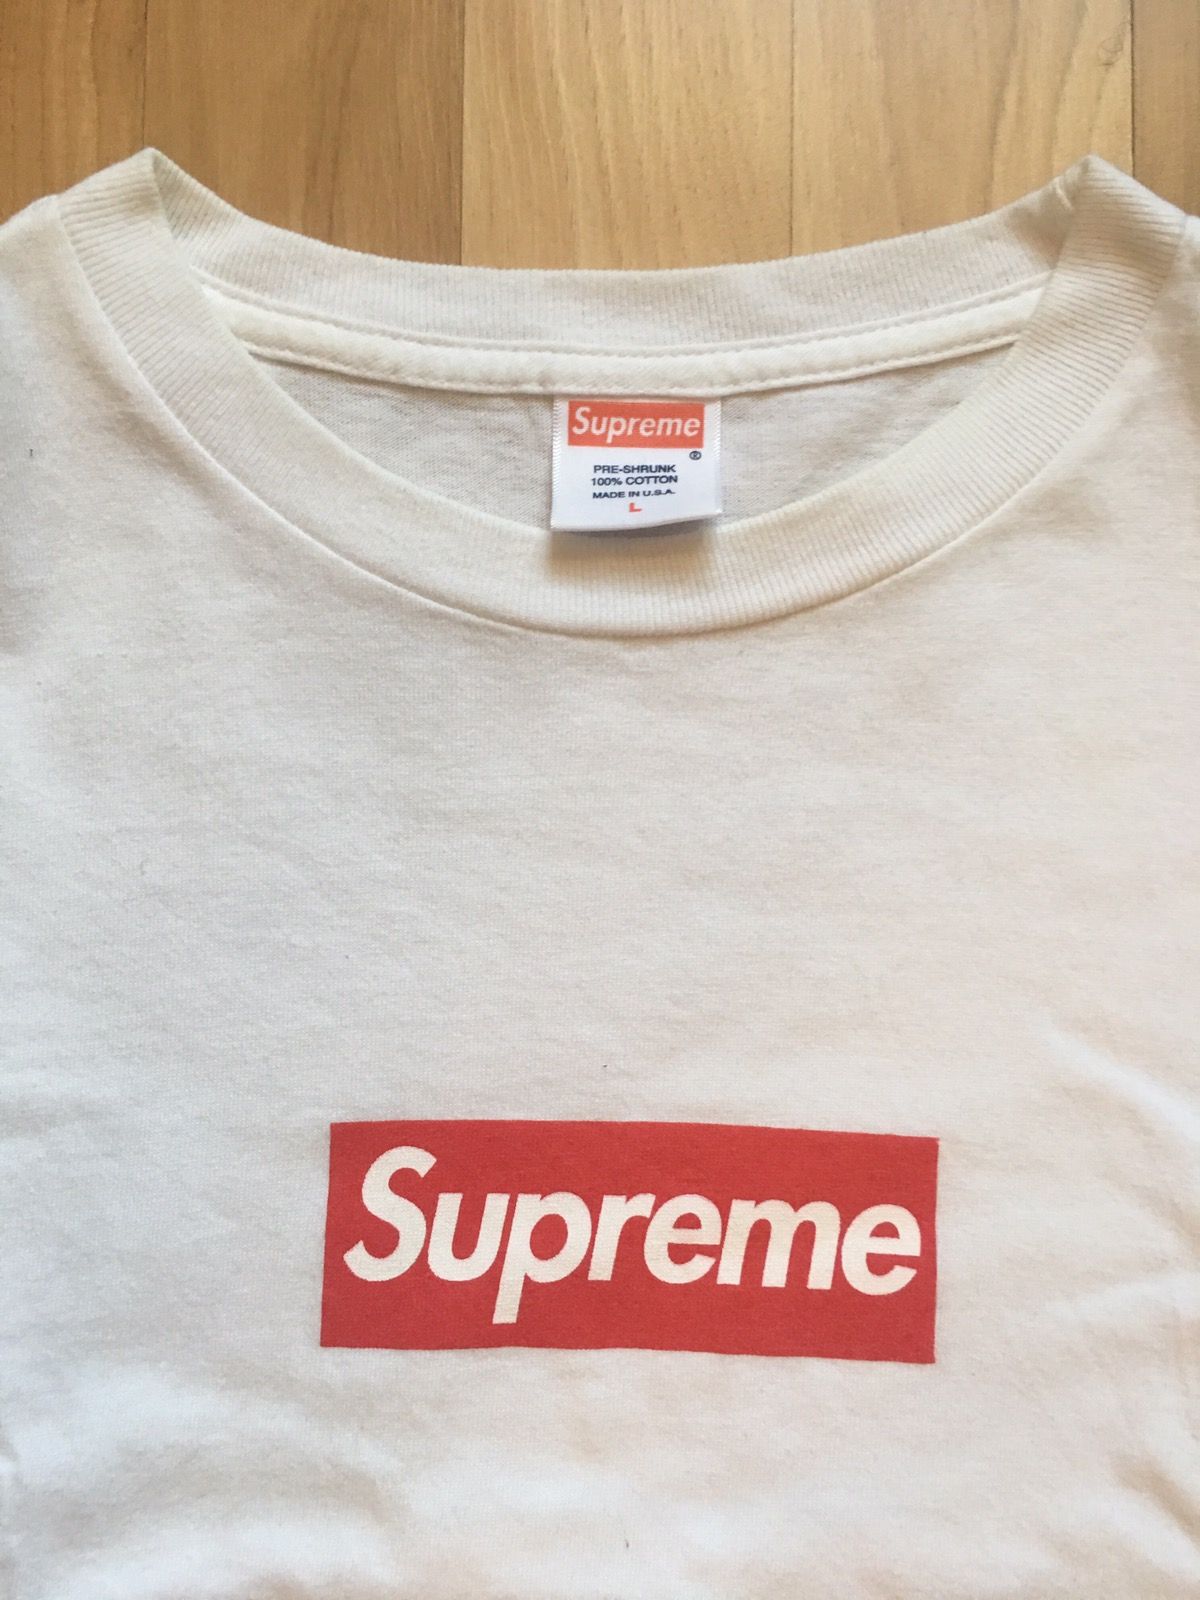 authentic supreme red on white box logo tee shirt size xl rare 2003